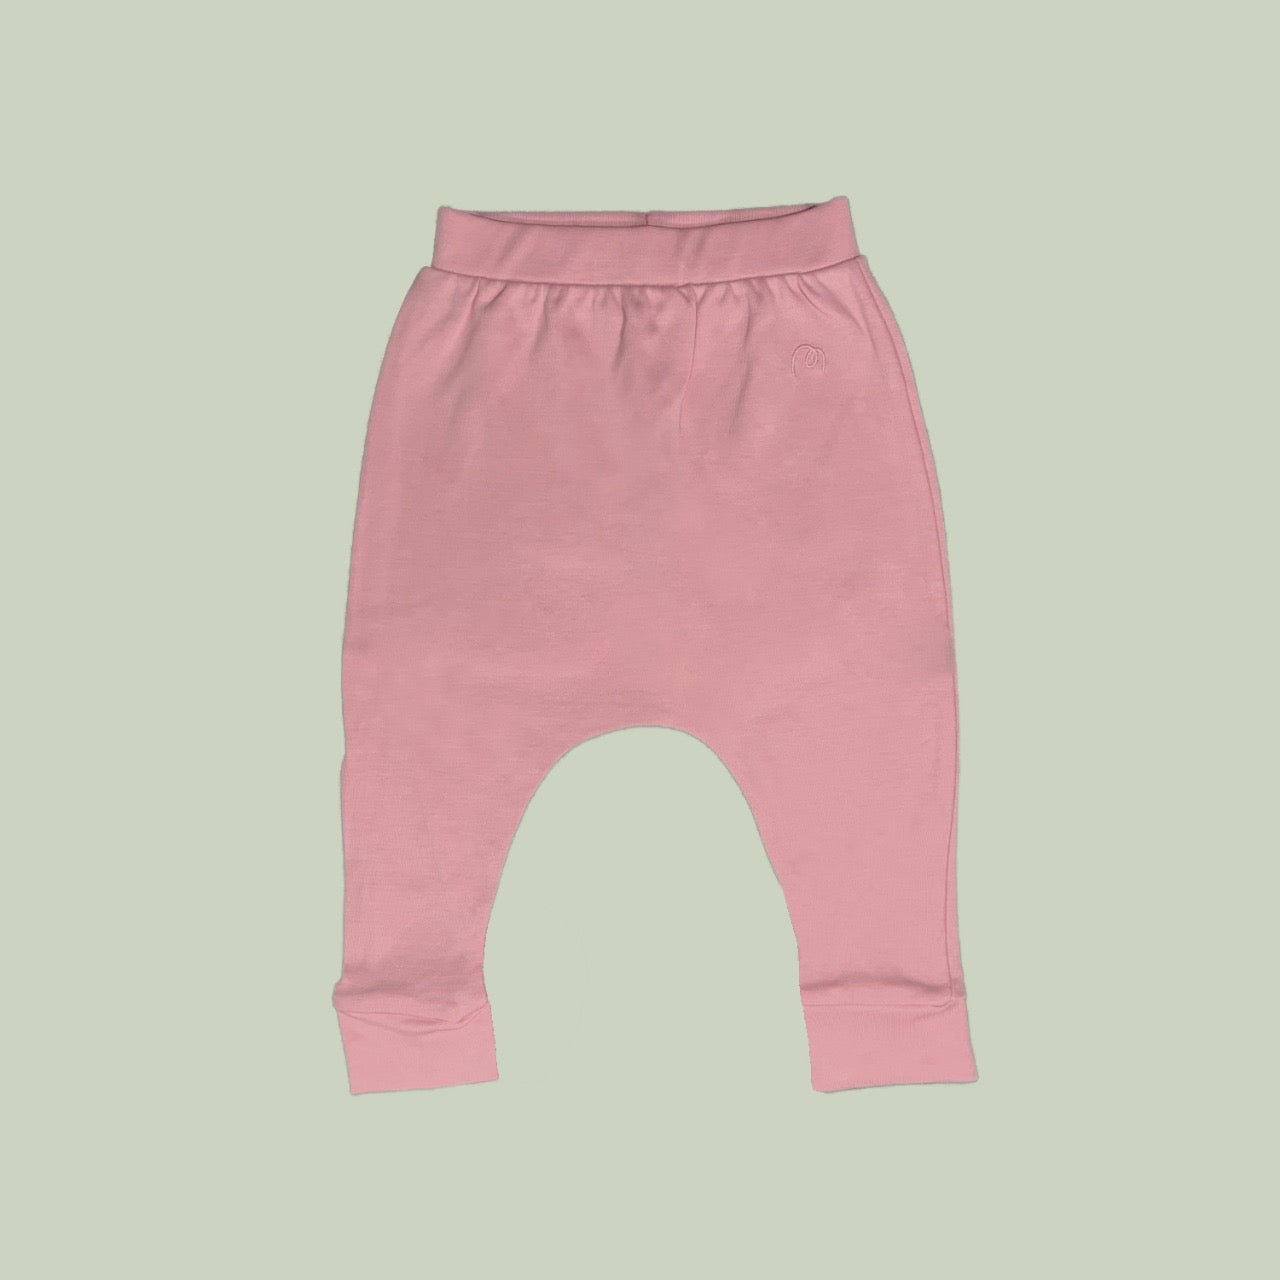 Pantalón básico sin pie palo rosa